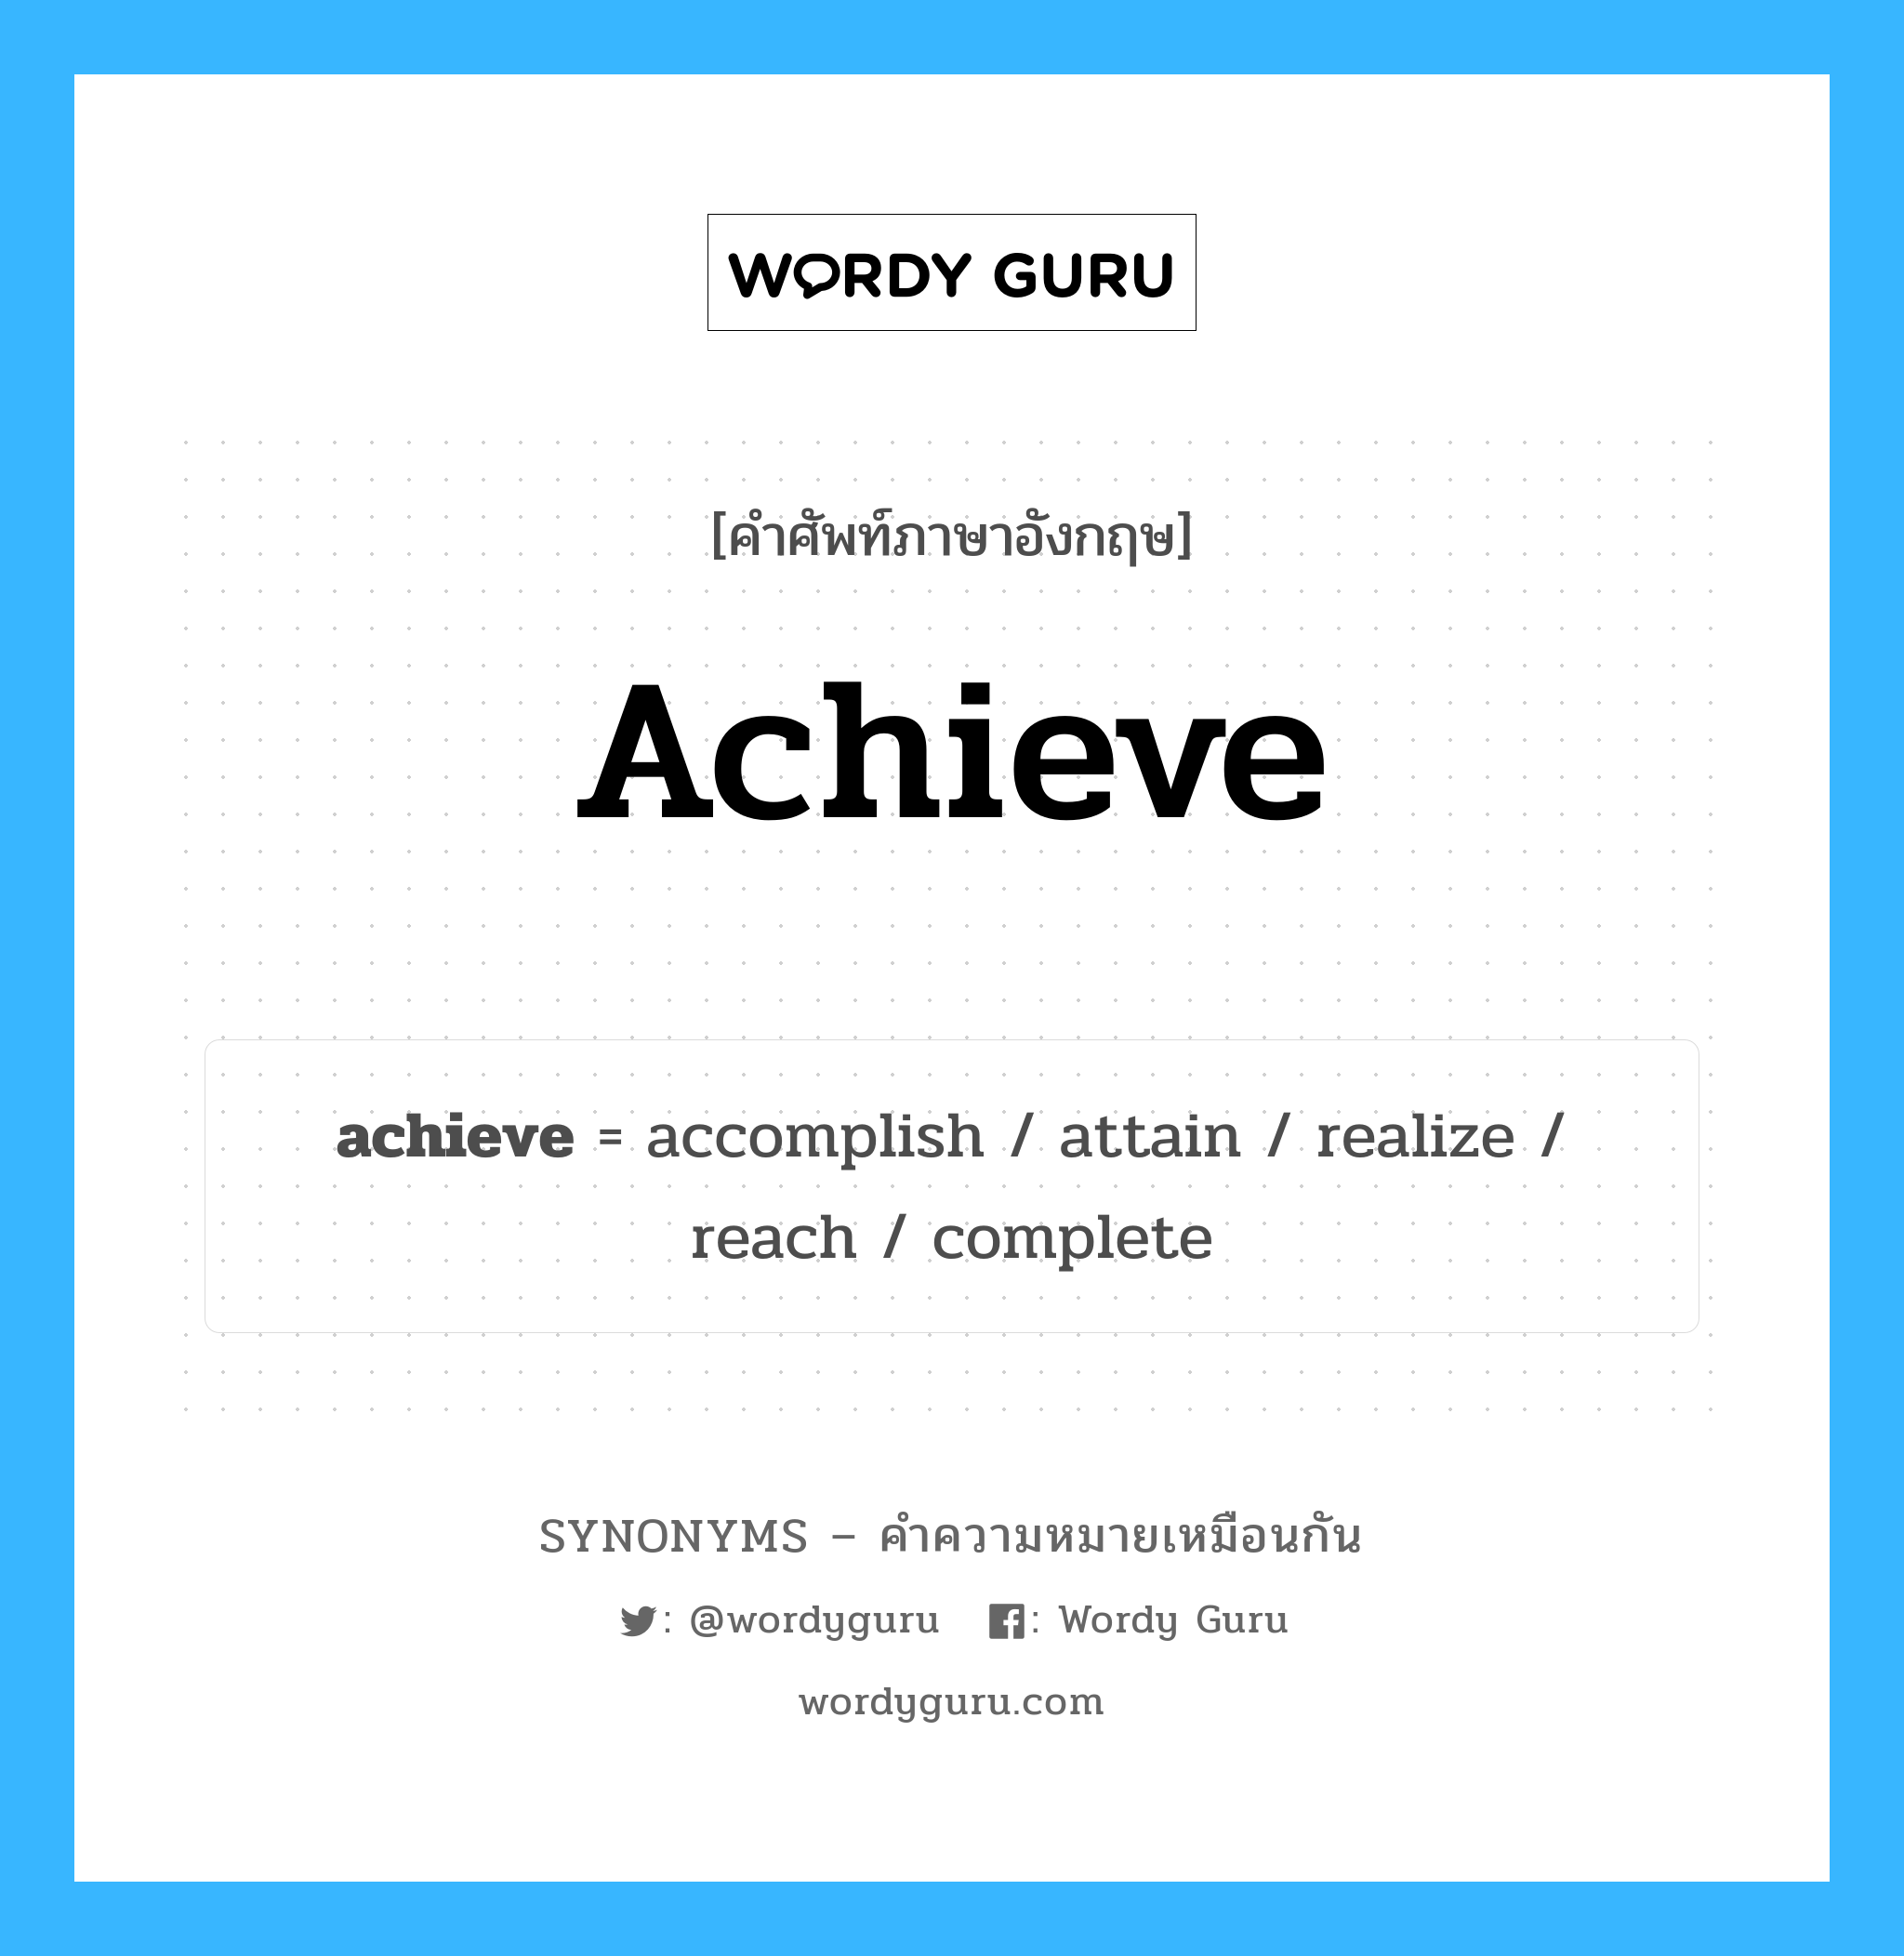 realize เป็นหนึ่งใน understand และมีคำอื่น ๆ อีกดังนี้, คำศัพท์ภาษาอังกฤษ realize ความหมายคล้ายกันกับ achieve แปลว่า ตระหนักถึง หมวด achieve